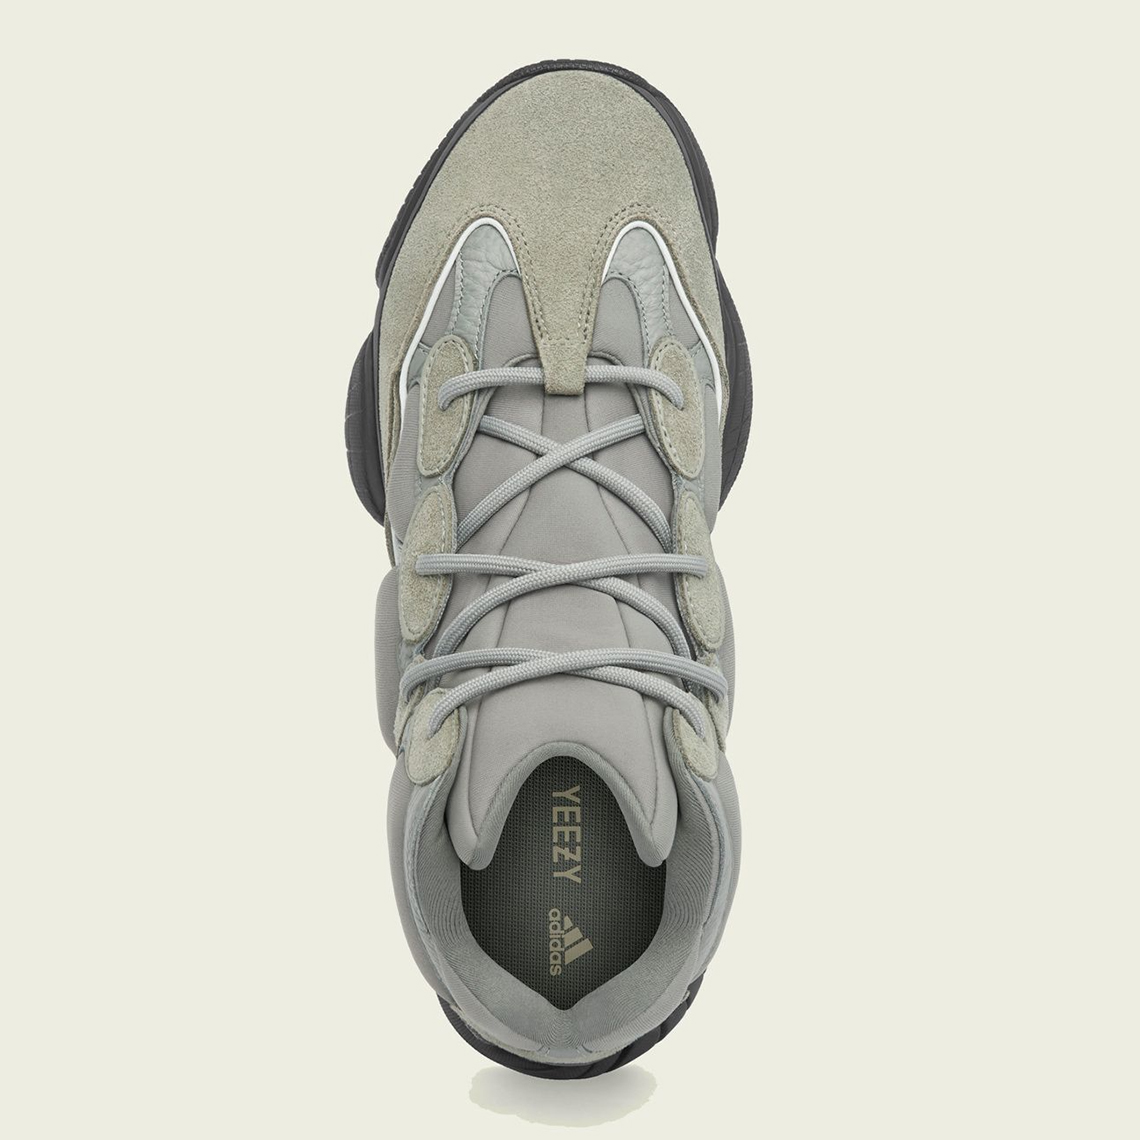 Adidas kaki Yeezy 500 High Gy0393 Release Date 2